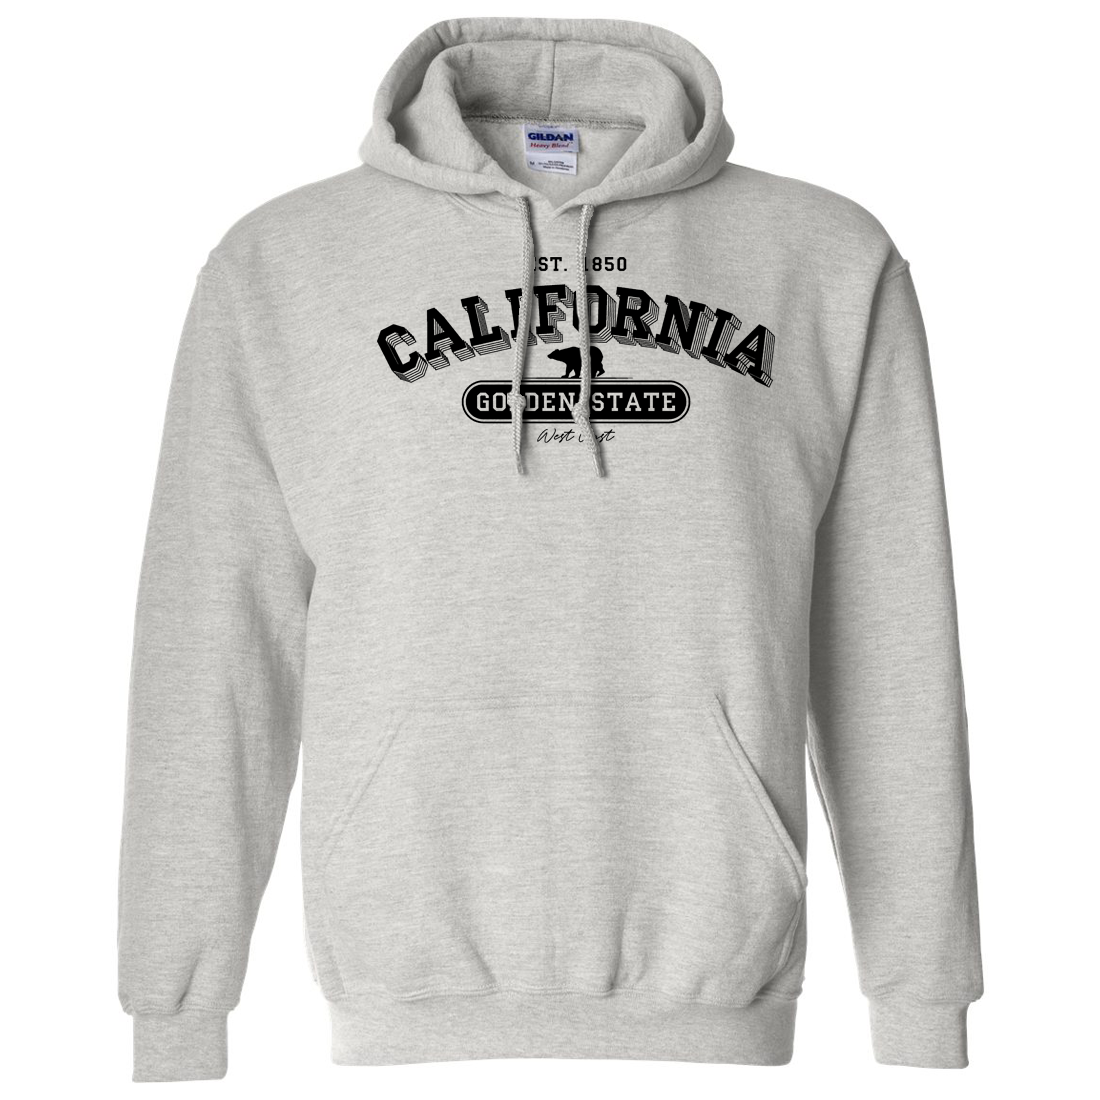 California Golden State 1850 Sweatshirt Hoodie